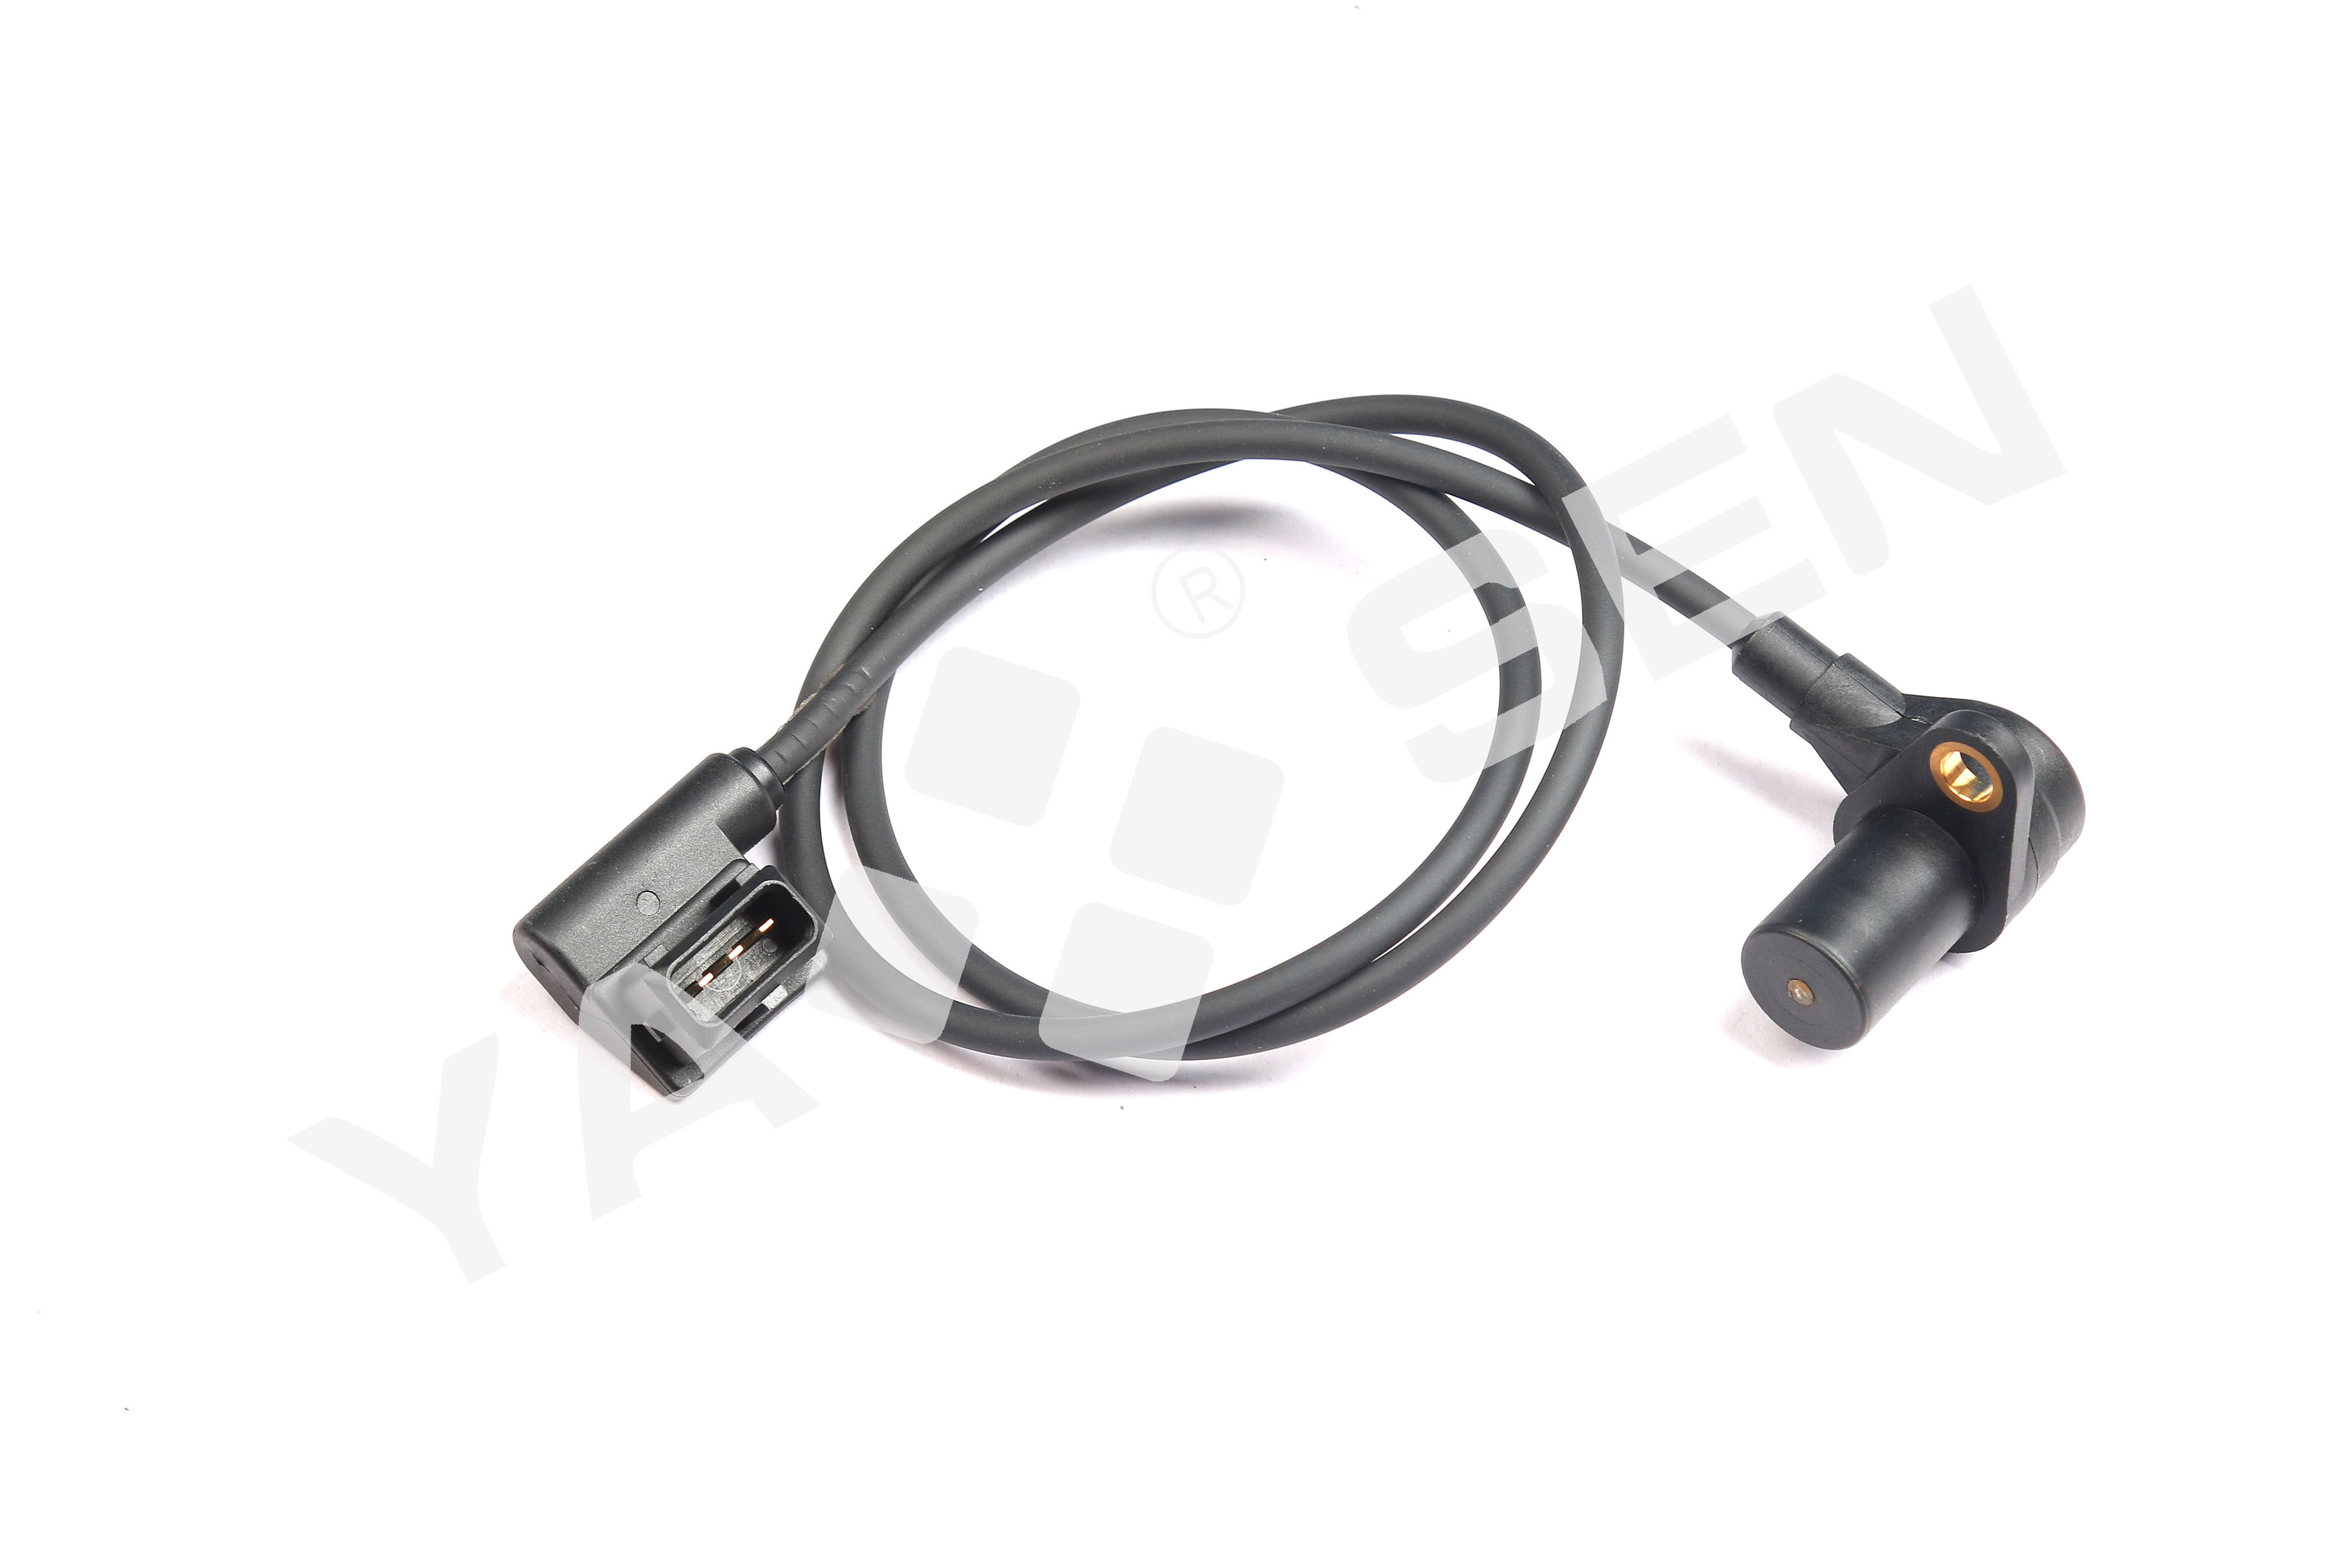 Crankshaft Position Sensor for BMW, 12141739886 7517146  0902190  XREV382  18829  CS1034  EPS121  501533 6PU009110591 Featured Image